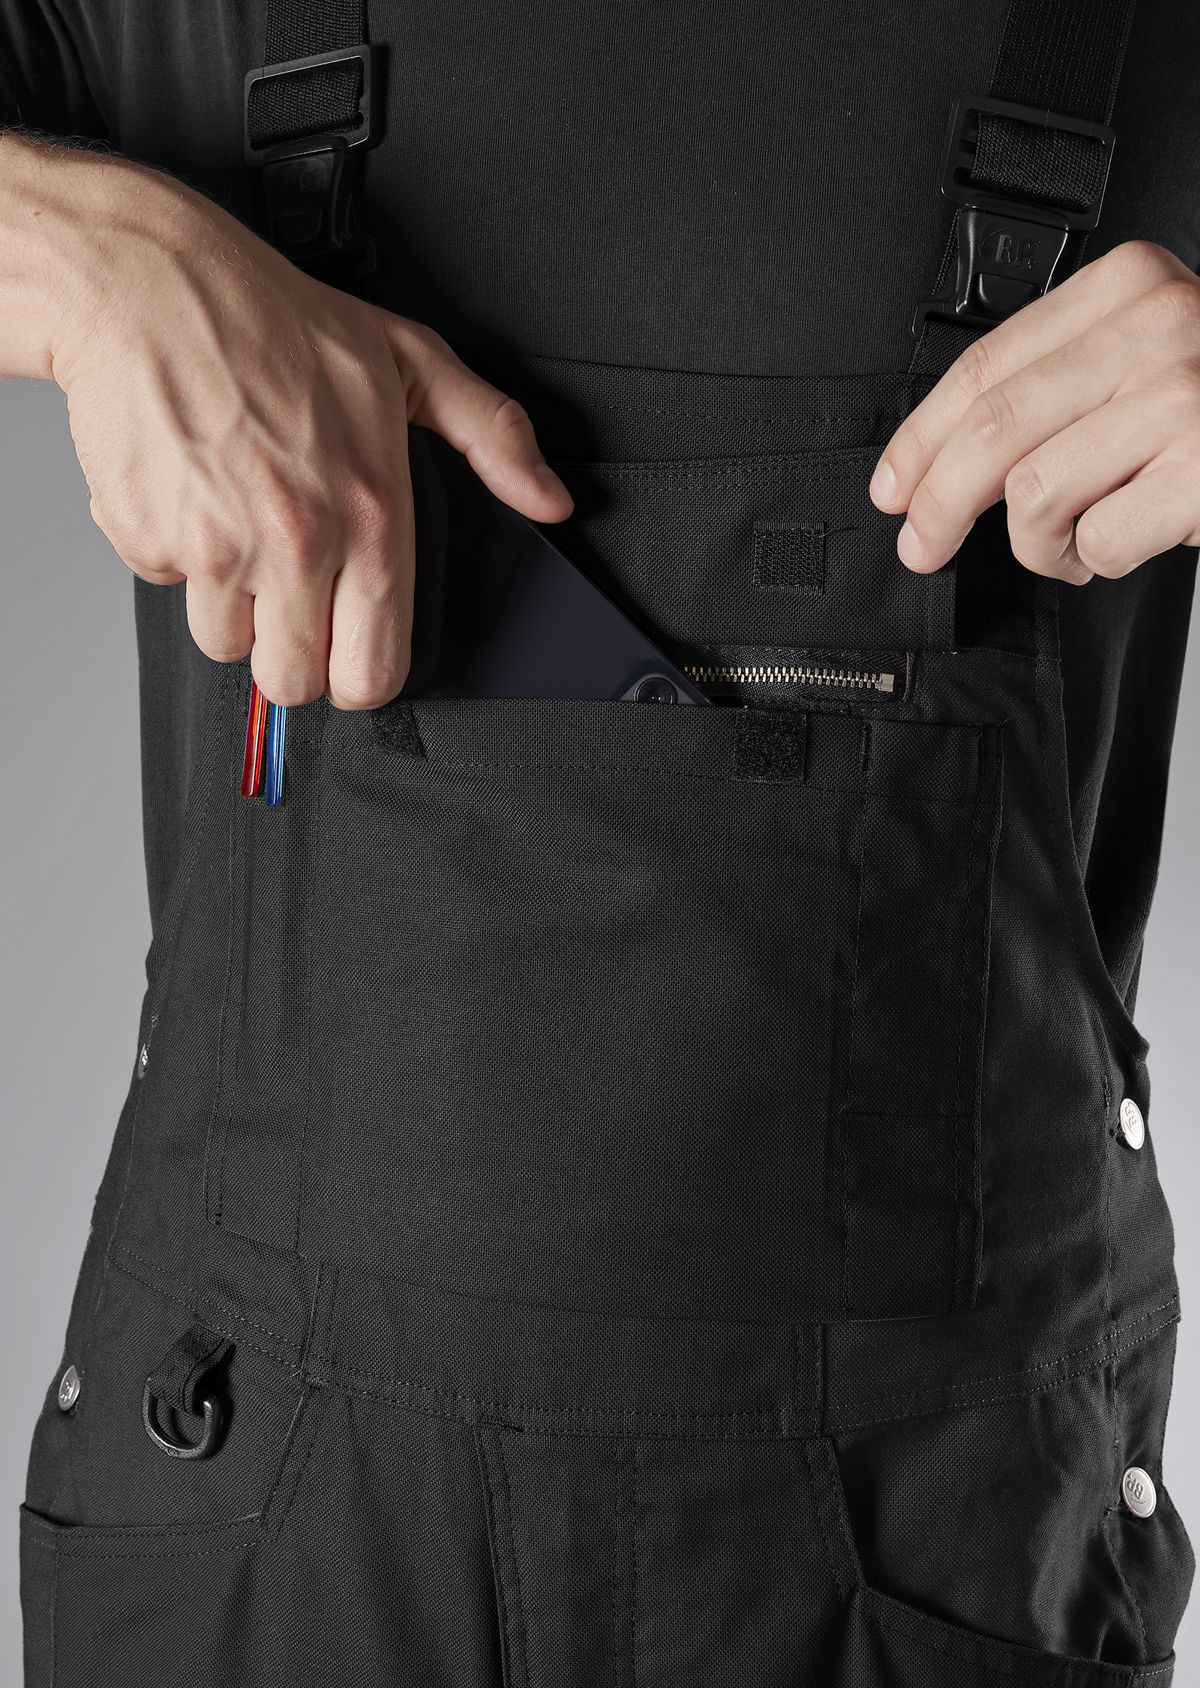 BP® Robust bib & brace with knee pad pockets